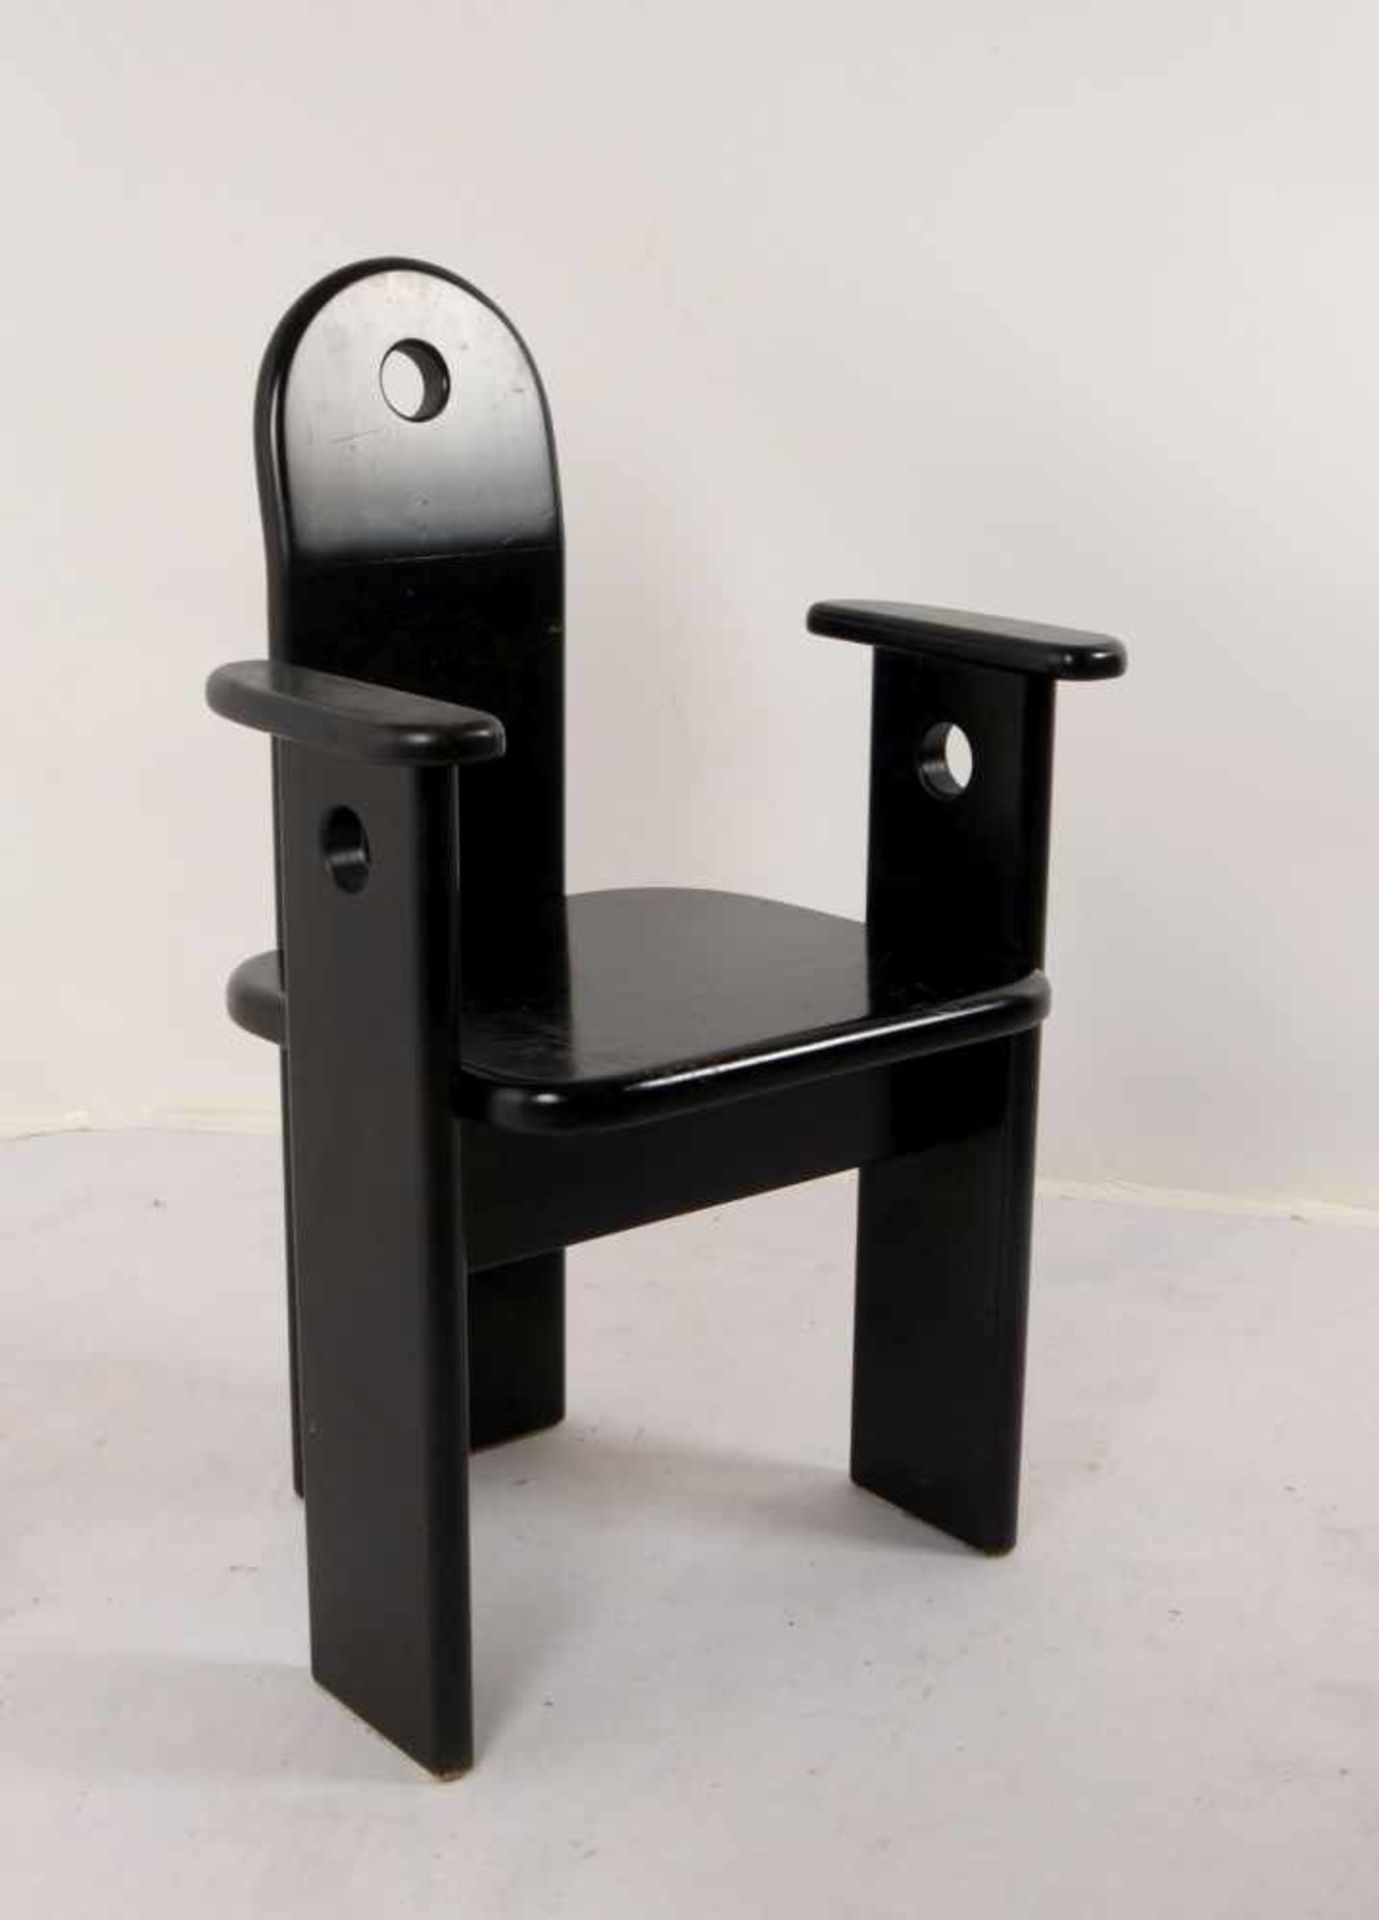 Designer-Armlehnstuhl, Holz schwarz lackiert; Lehnhöhe 92 cm, Sitzhöhe 45 cm (Sitzfläche mit